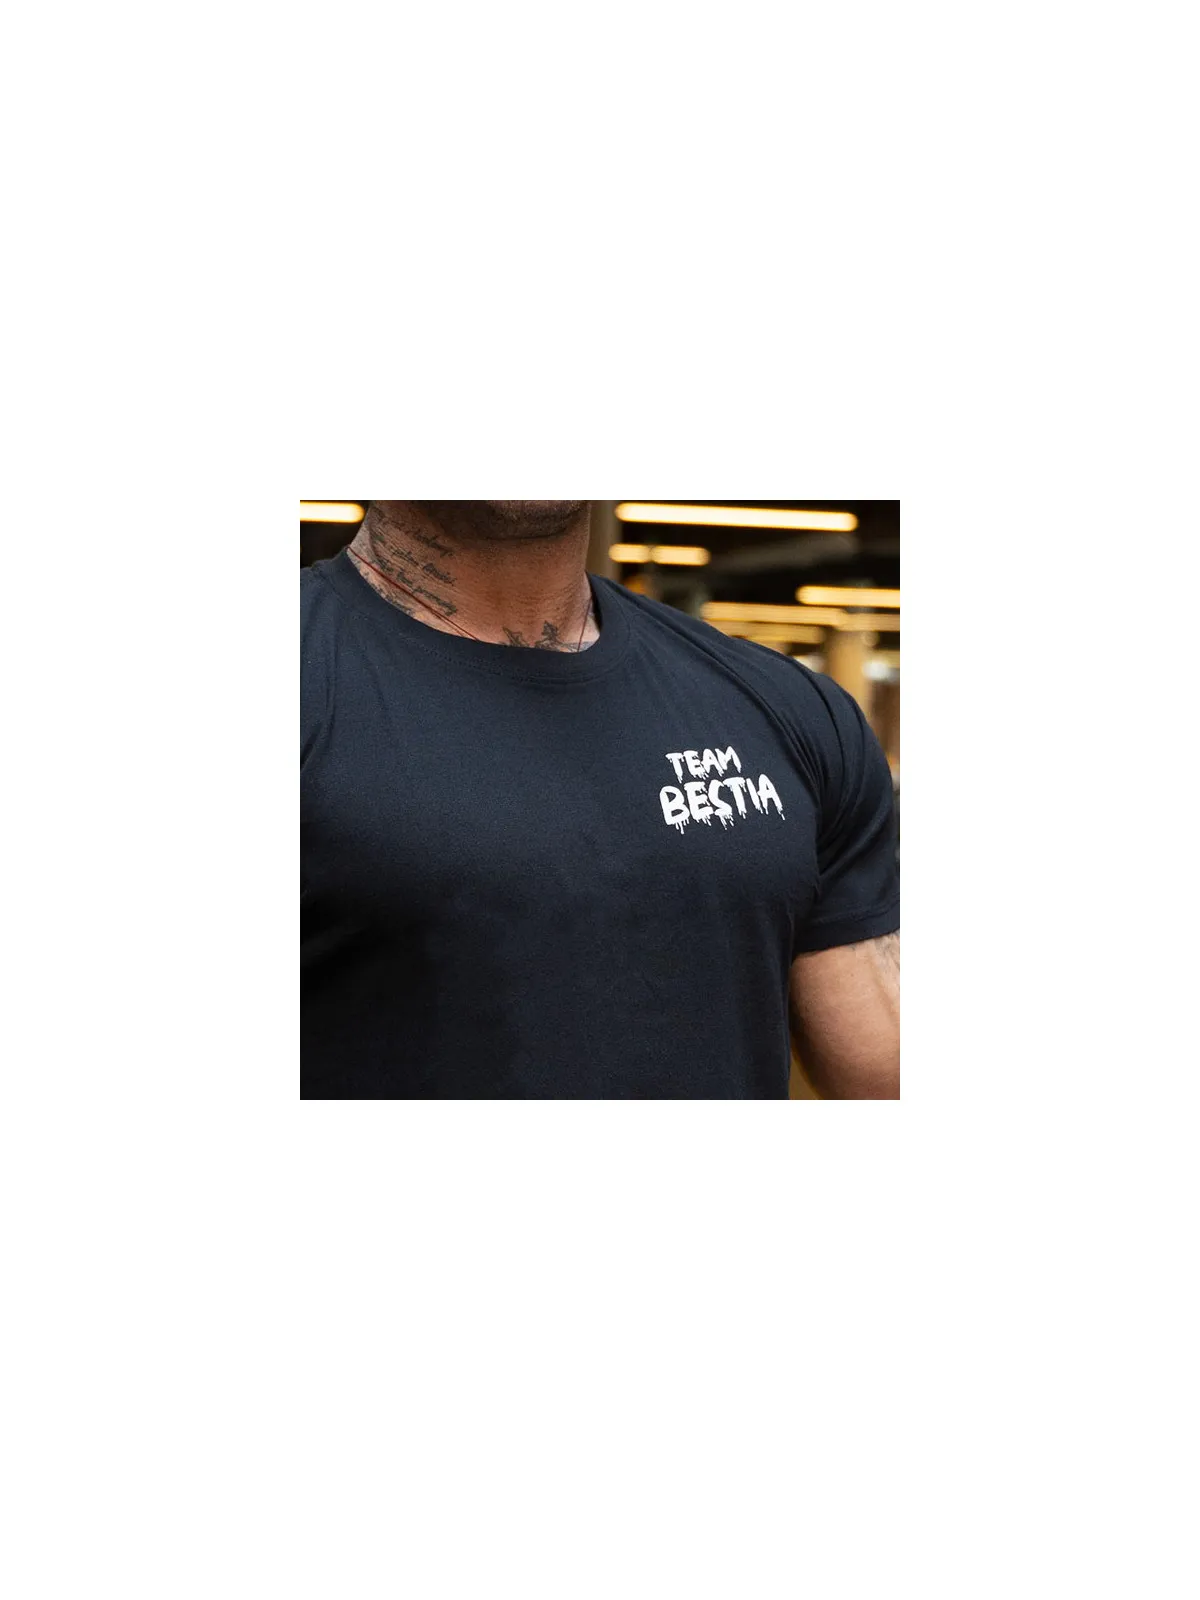 Men's T-shirt TEAM BESTIA Black-white